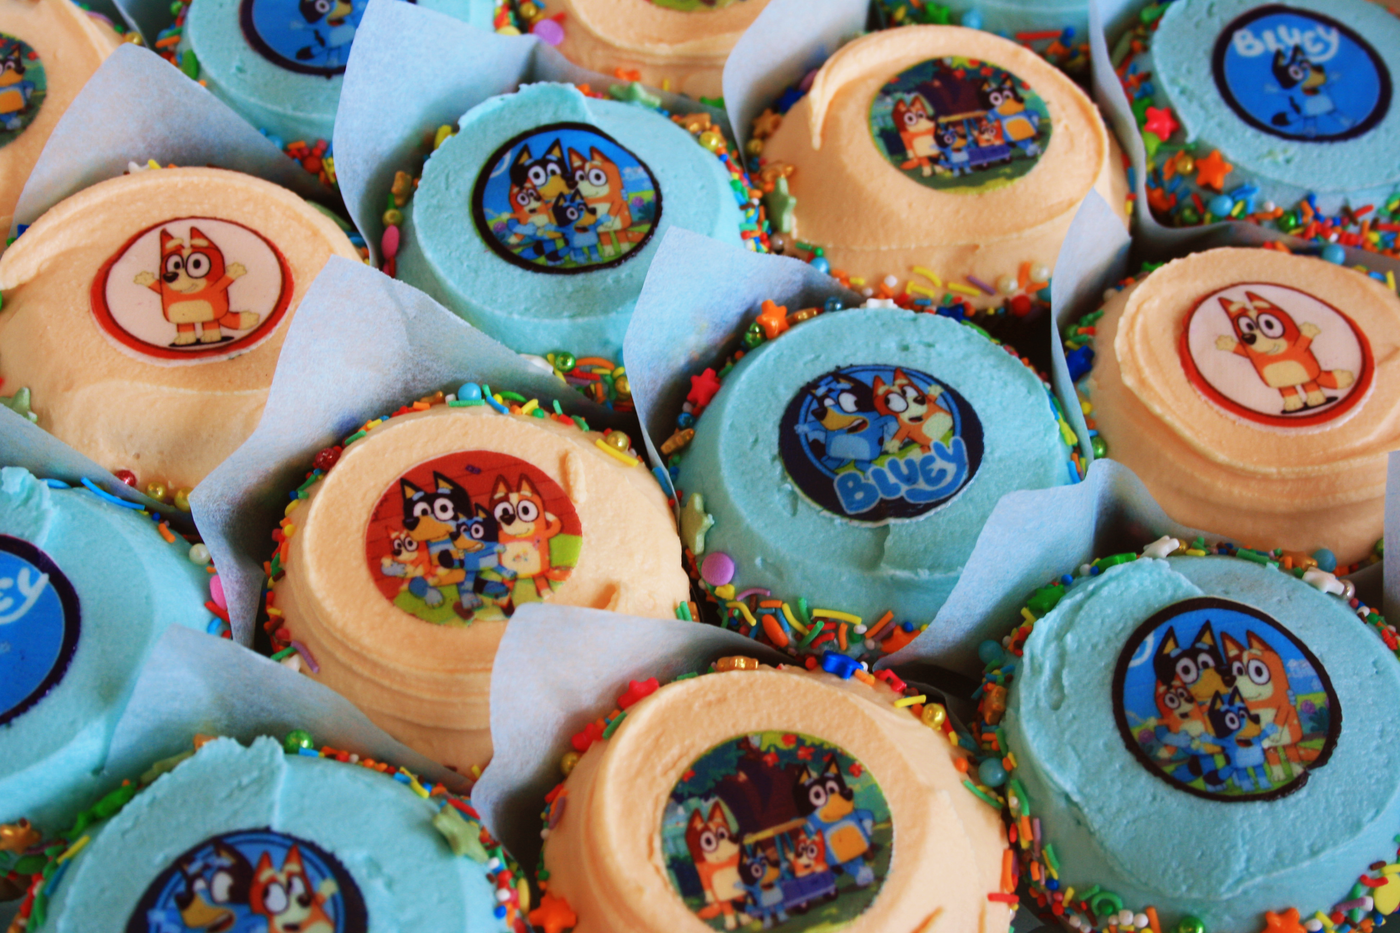 Bluey Cupcakes, My Little Cupcake Sydney